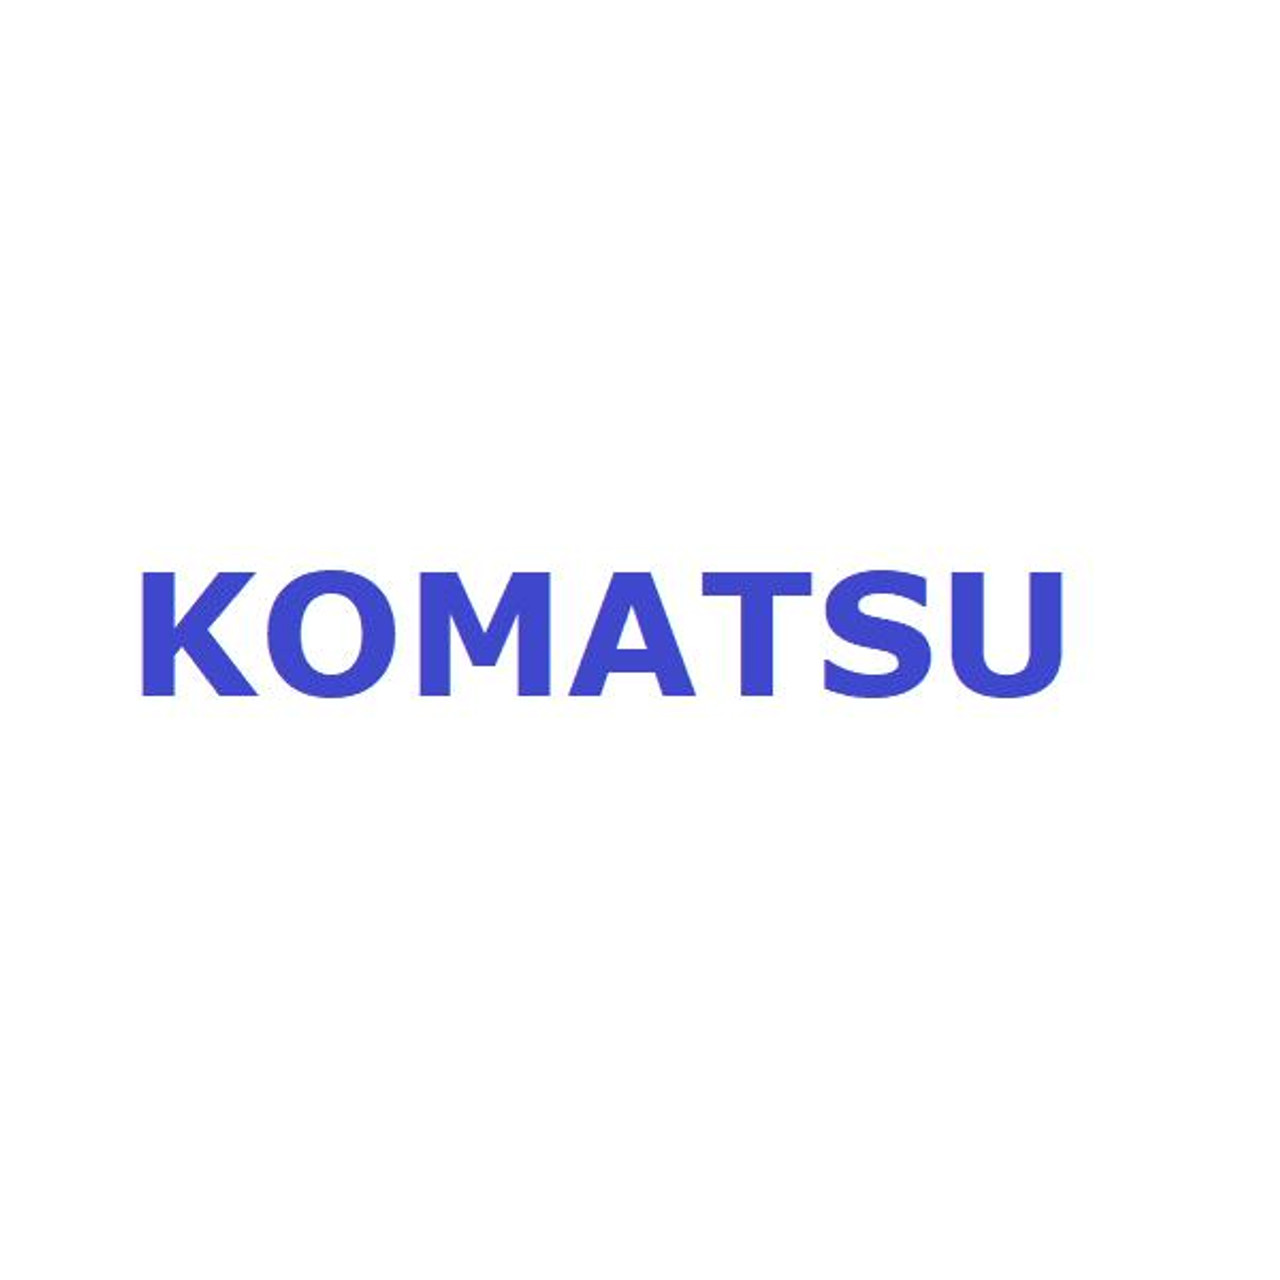 Komatsu Seal # 707-99-27310 fit Cylinder 60 x 85mm